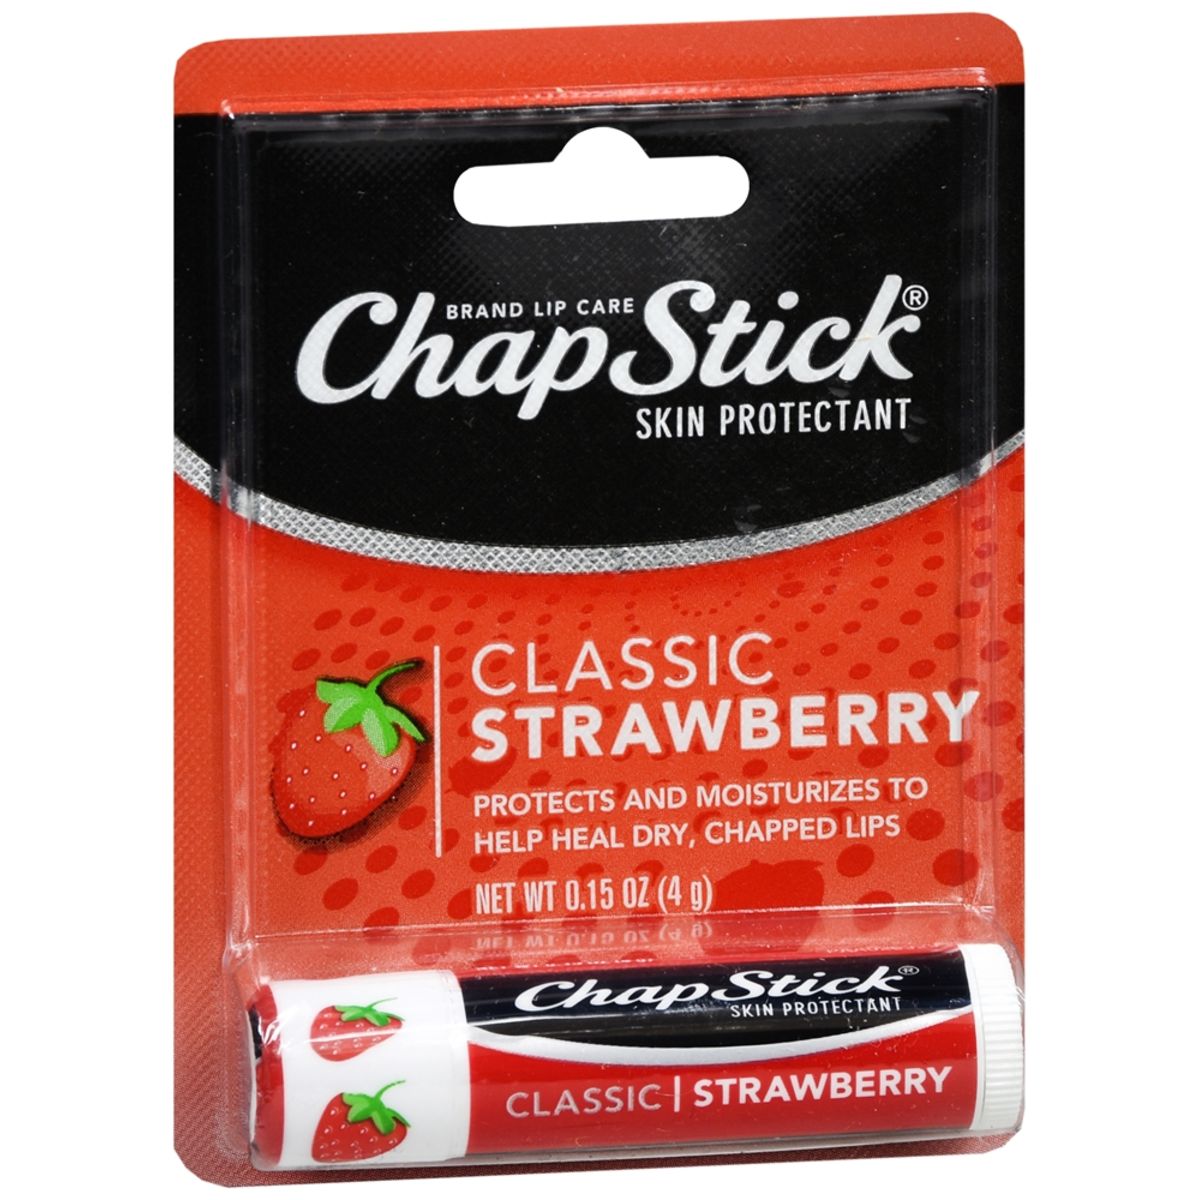 ChapStick Skin Protectant Classic Strawberry - 0.15 OZ